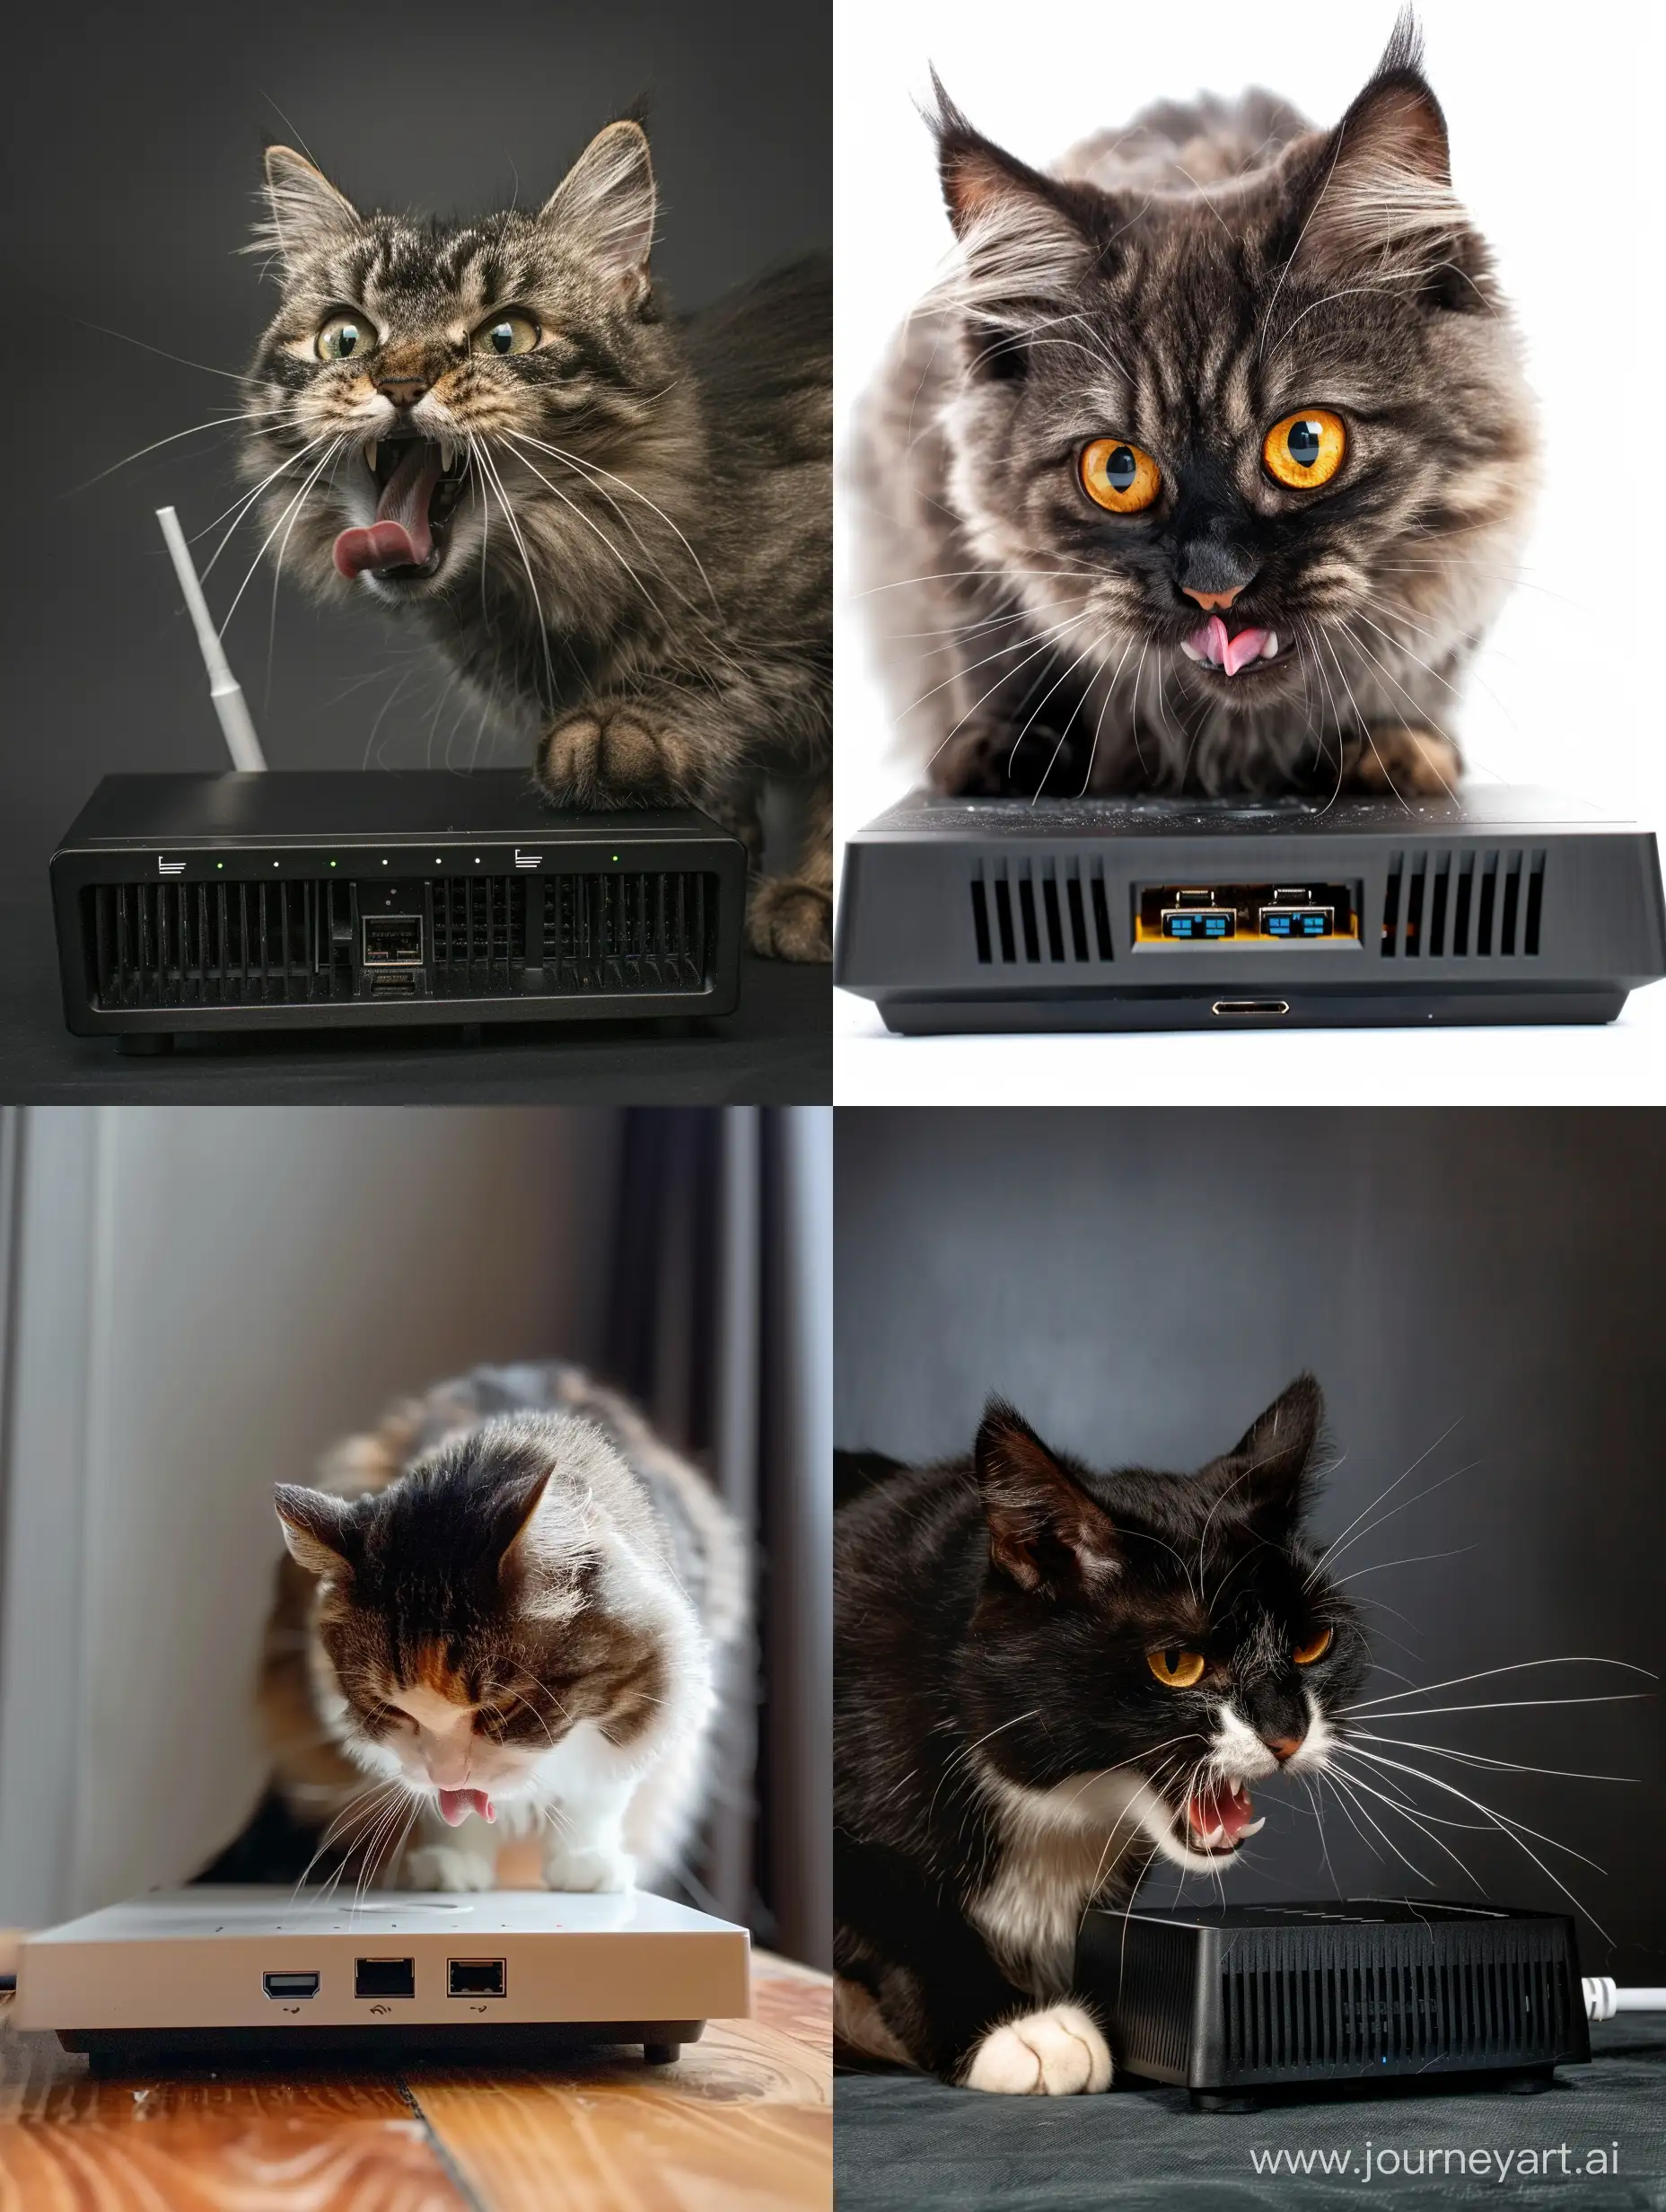 Fat cat bites 5G router